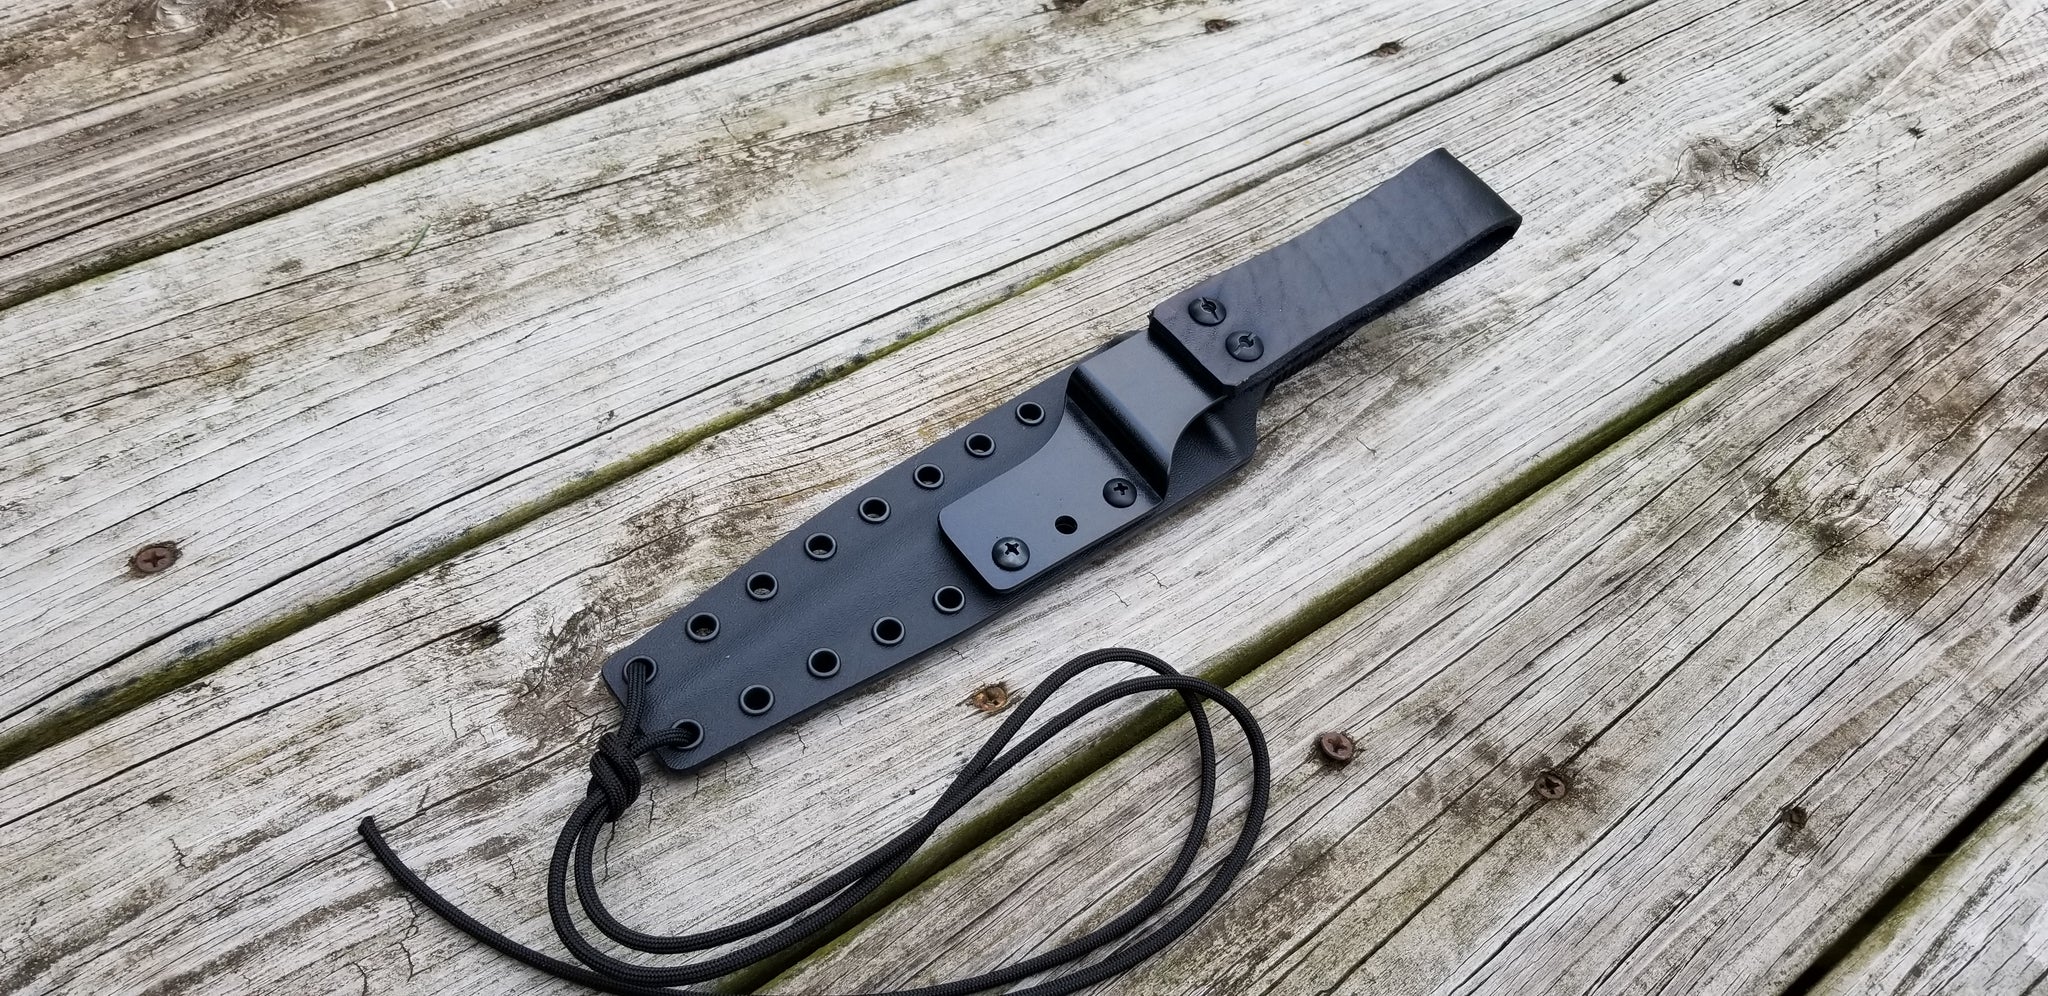 Fairbairn sykes commando custom Pancake style kydex sheath w/ Leather Looped offset drop belt attach.